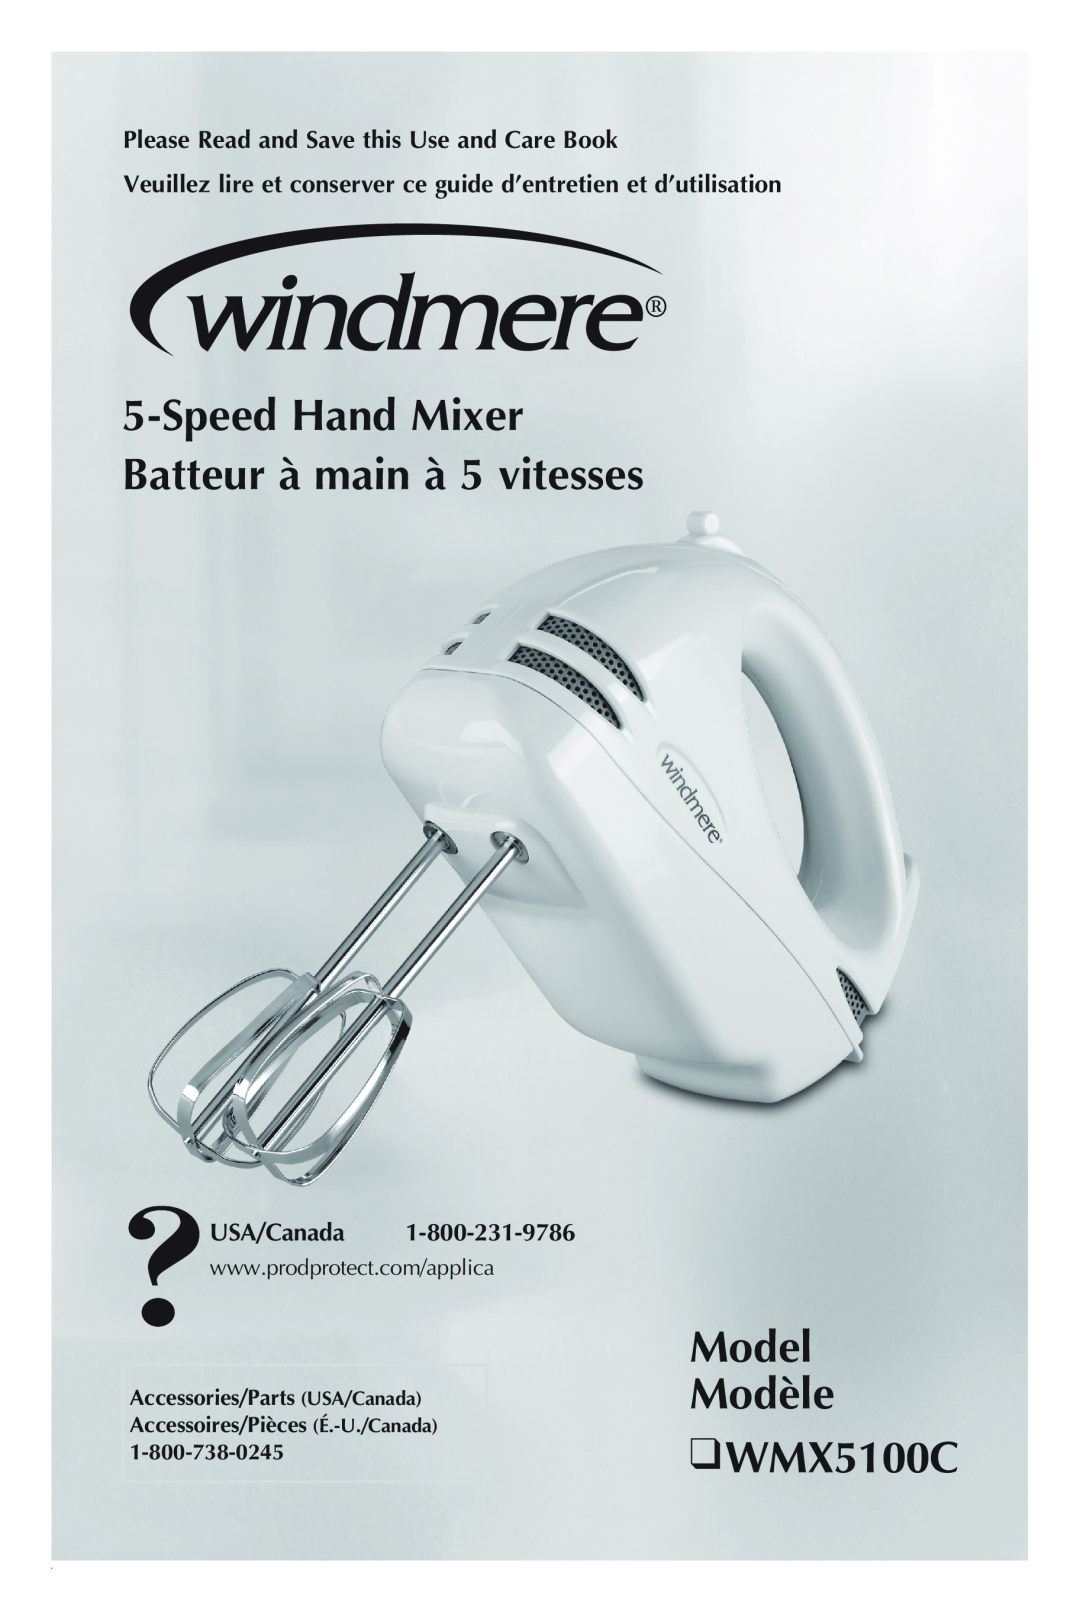 Windmere manual Model Modèle WMX5100C, Speed Hand Mixer Batteur à main à 5 vitesses, USA/Canada 